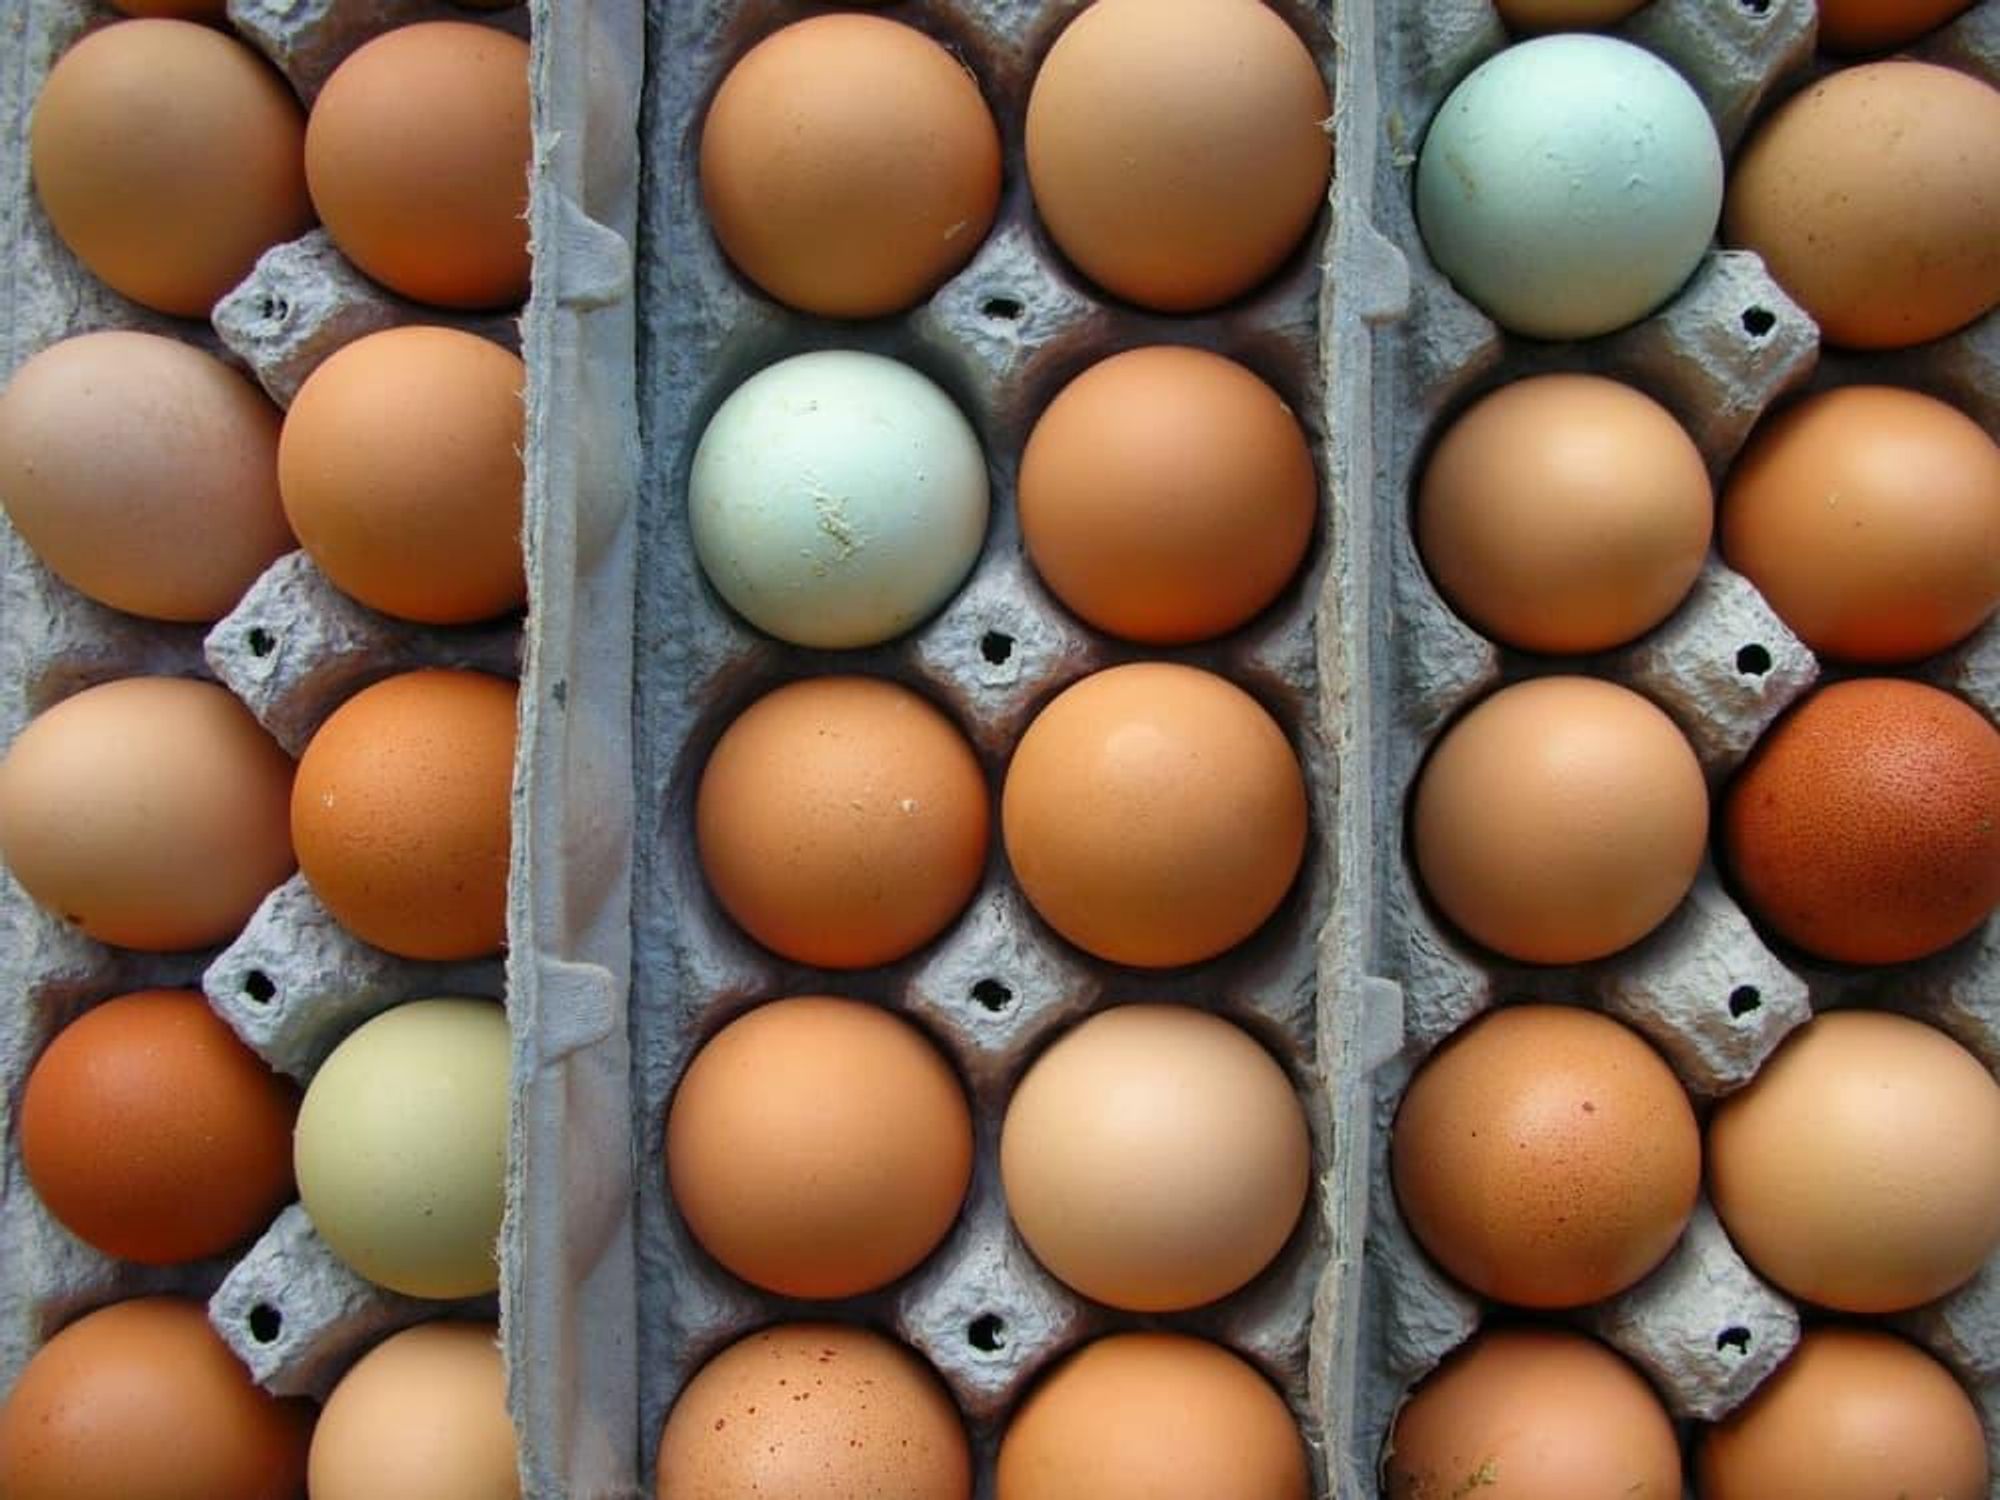 fresh farm eggs in cartons